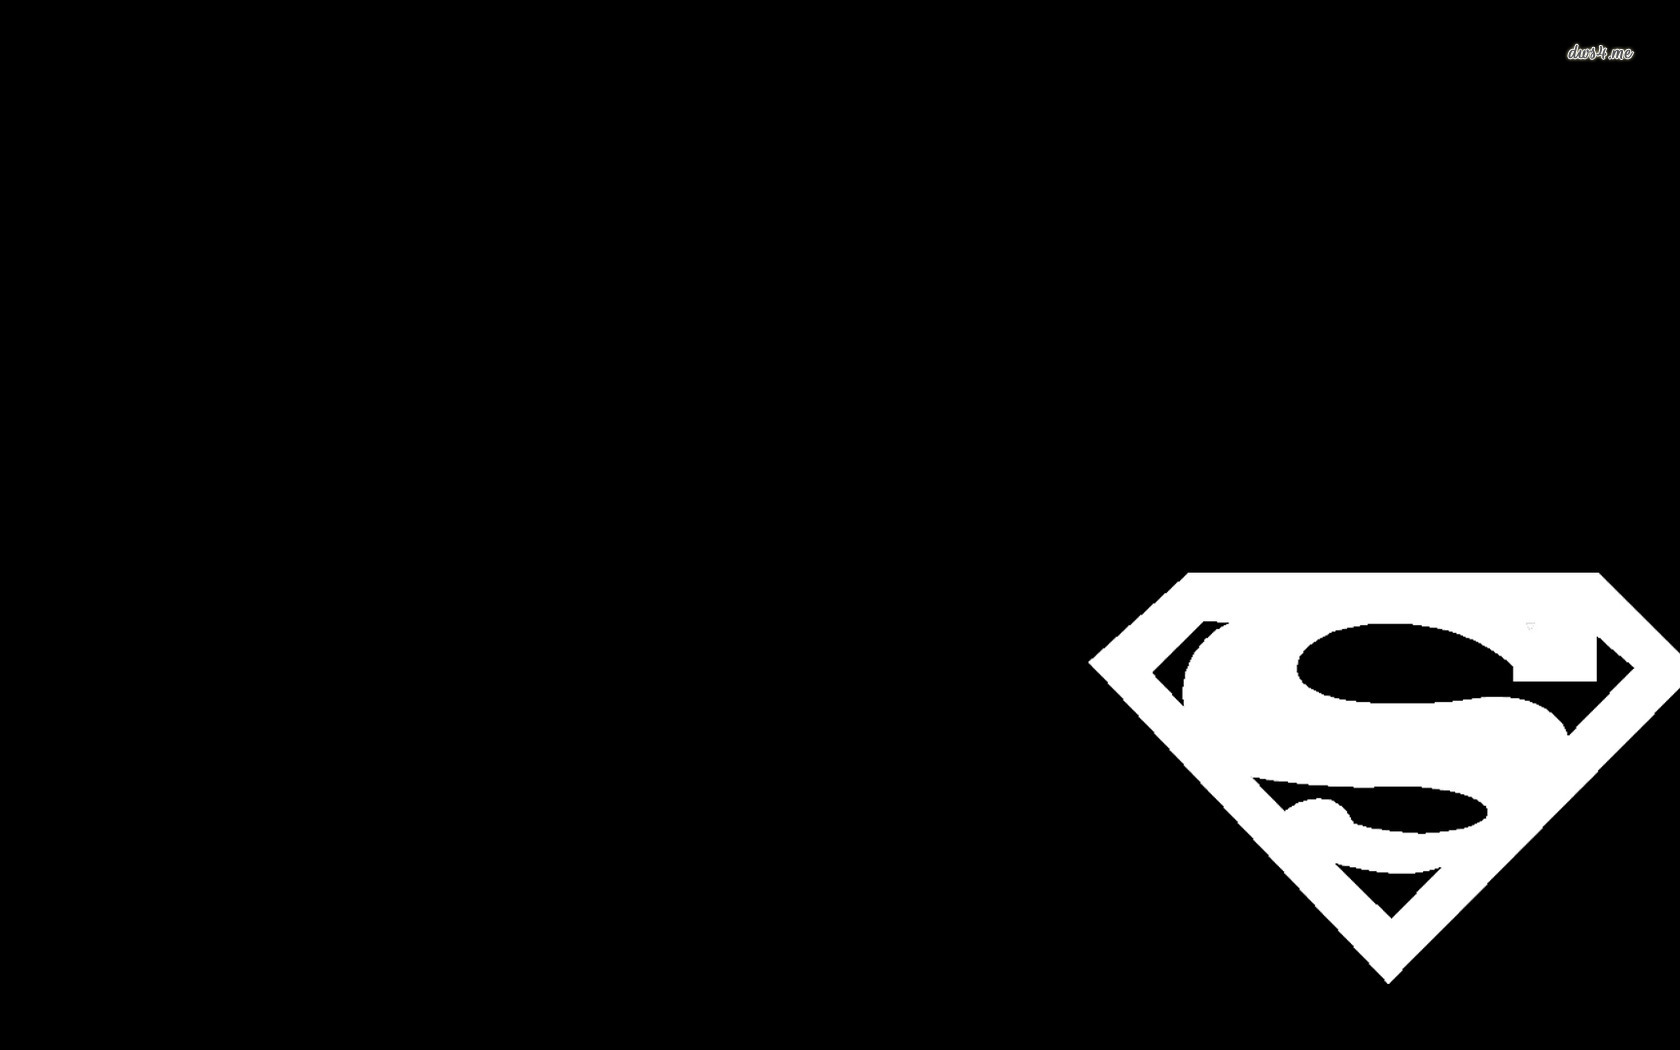 Superman Logo wallpaper - Movie wallpapers - #1500